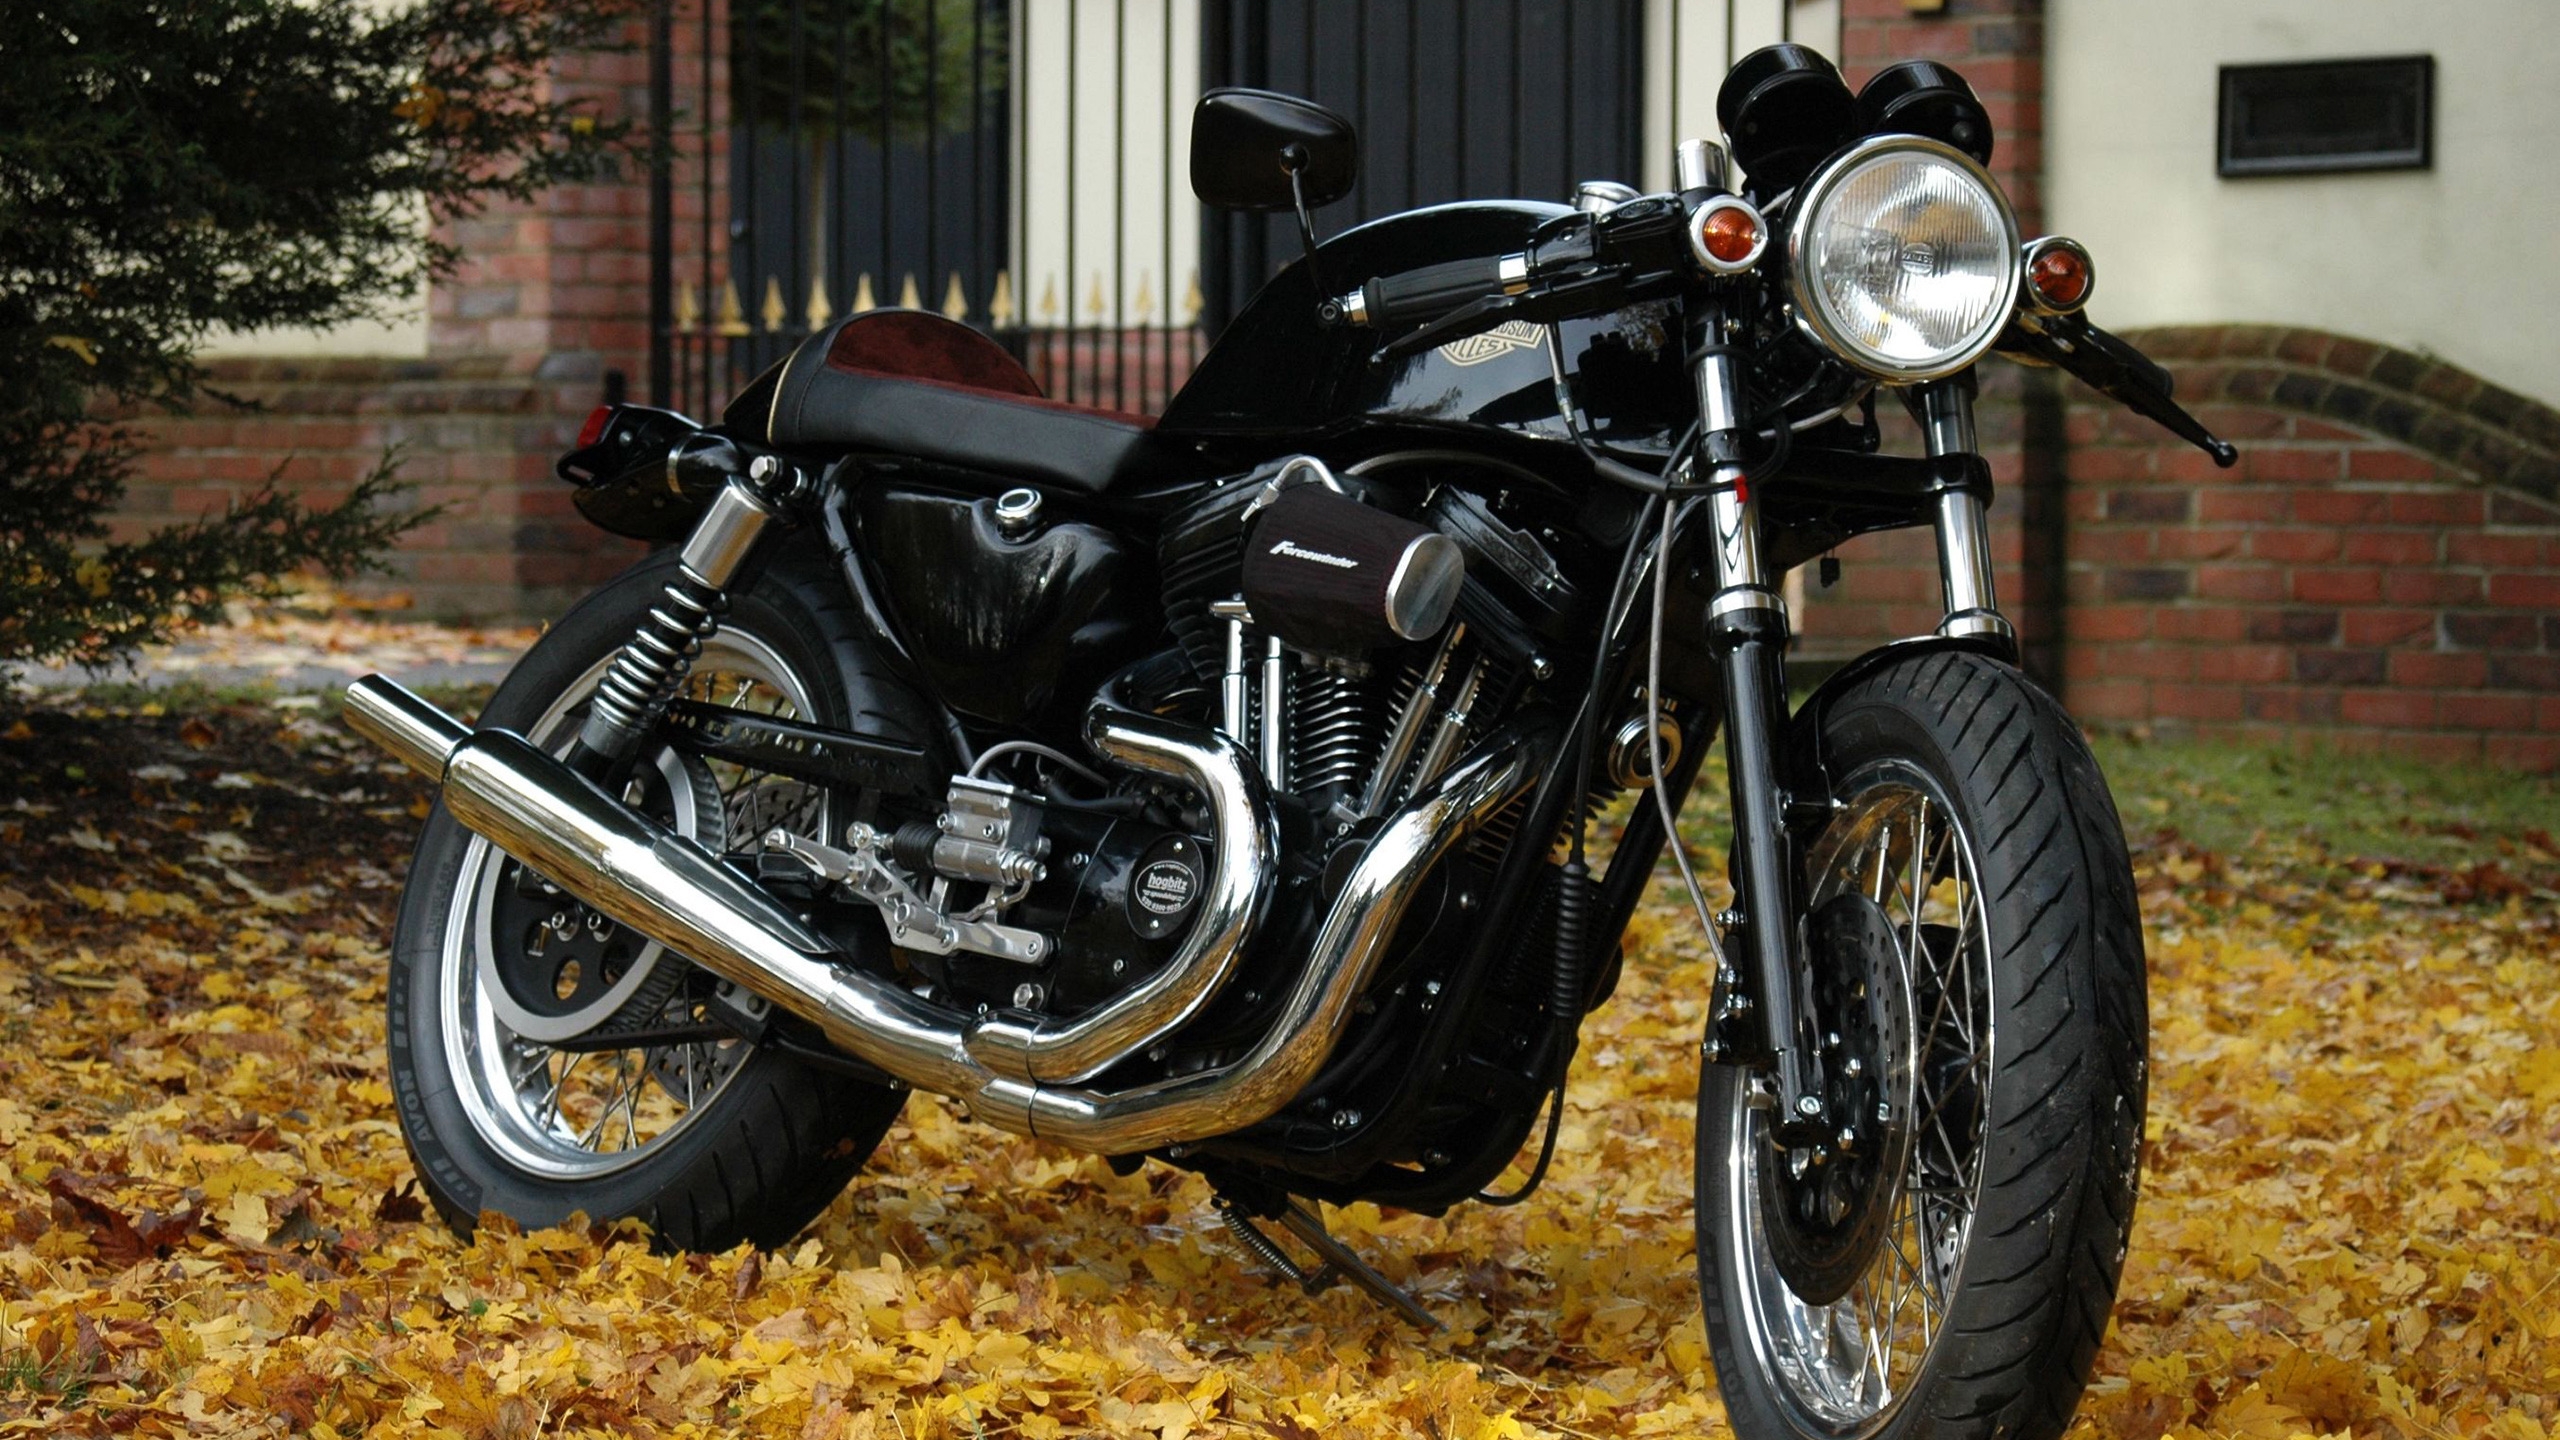 General 2560x1440 motorcycle vehicle Harley-Davidson black motorcycles American motorcycles